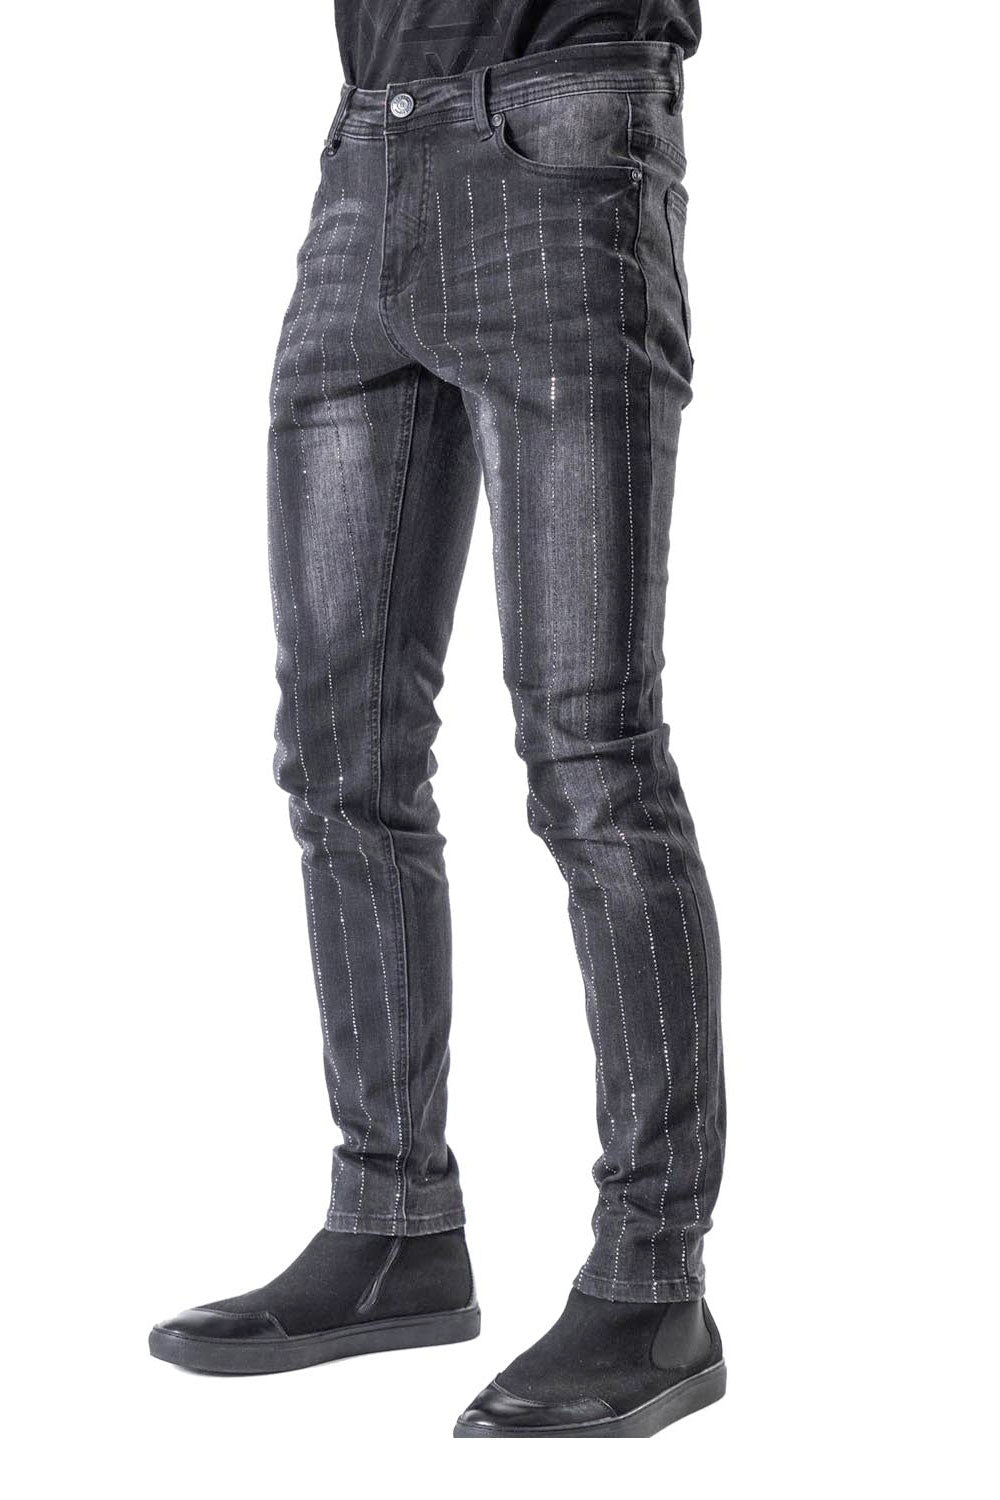 BARABAS Men's Rhinestone Stretchy Slim Fit Black Denim Jeans SN8887